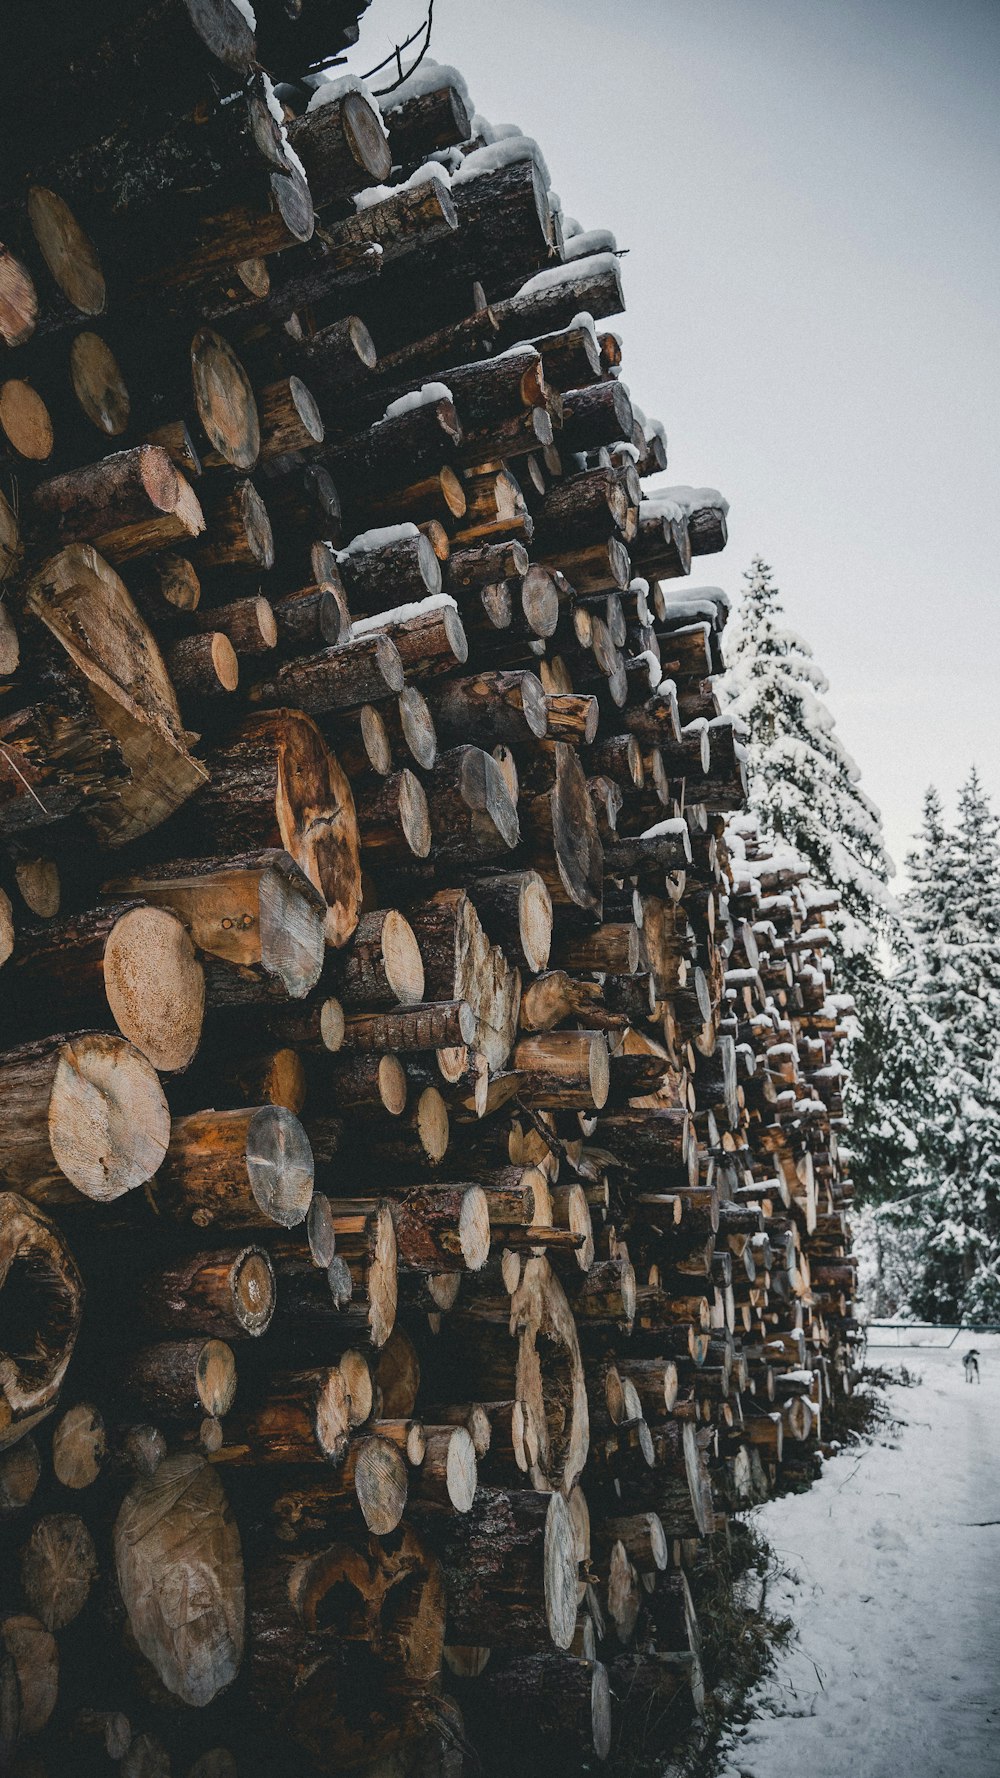 a large pile of cut logs